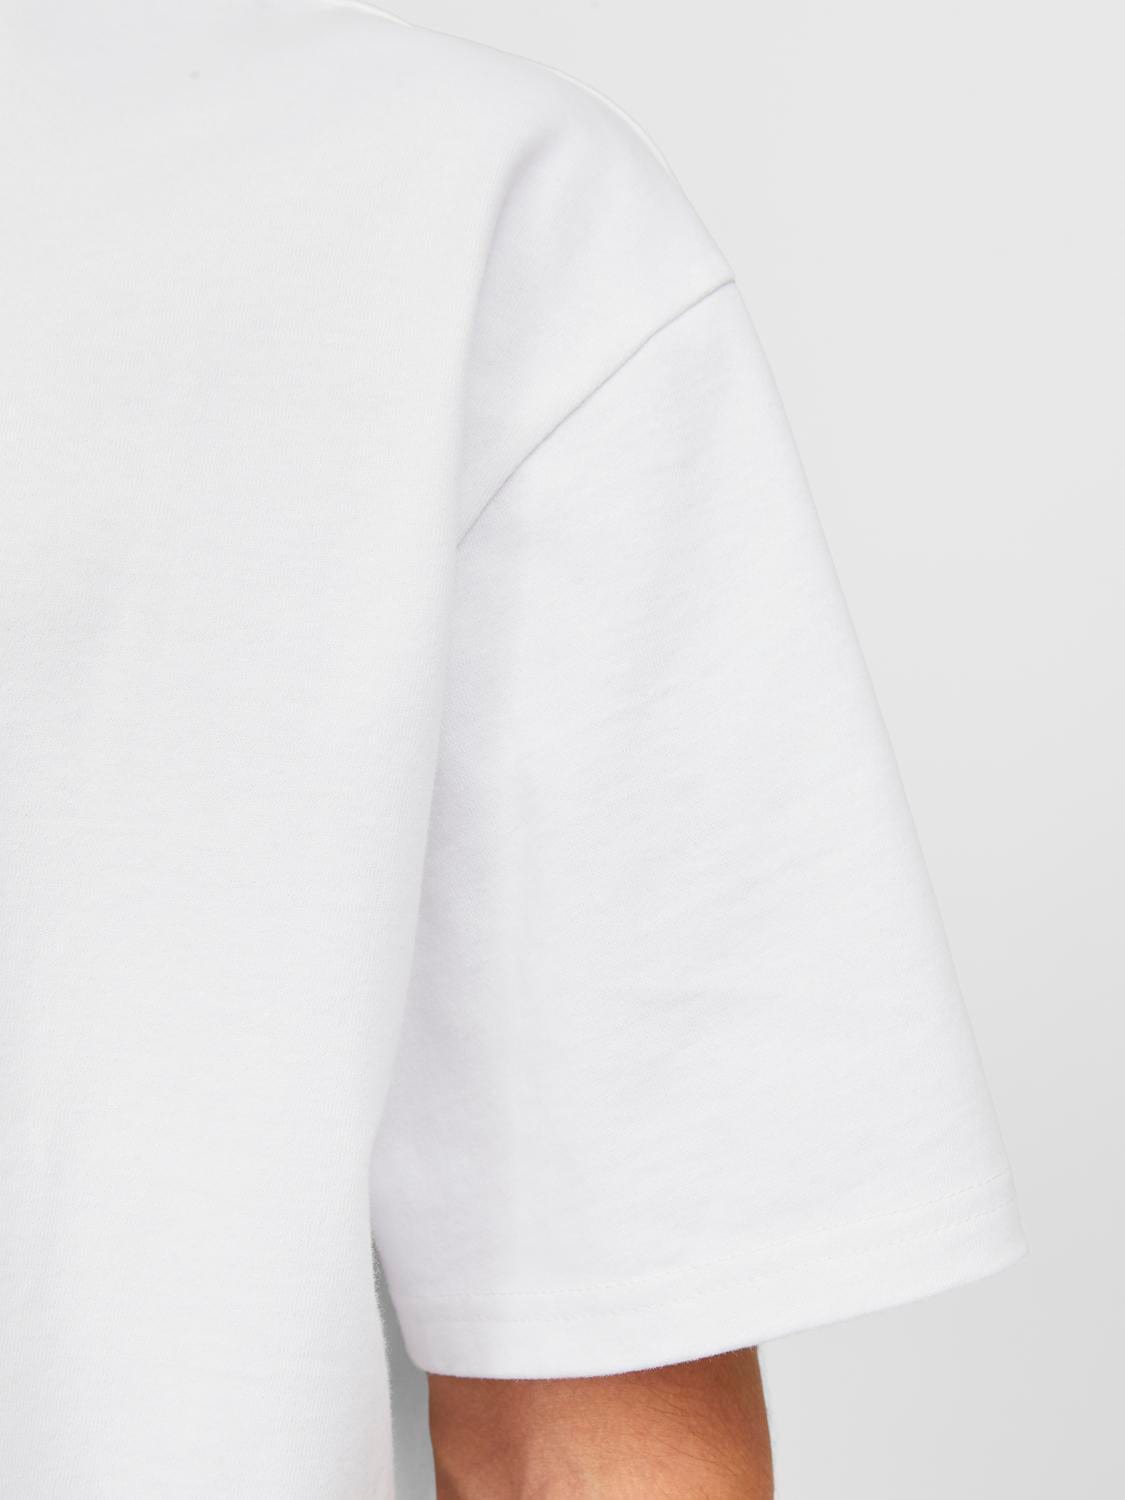 Camiseta oversize lisa blanca -JPRBLAHARVEY